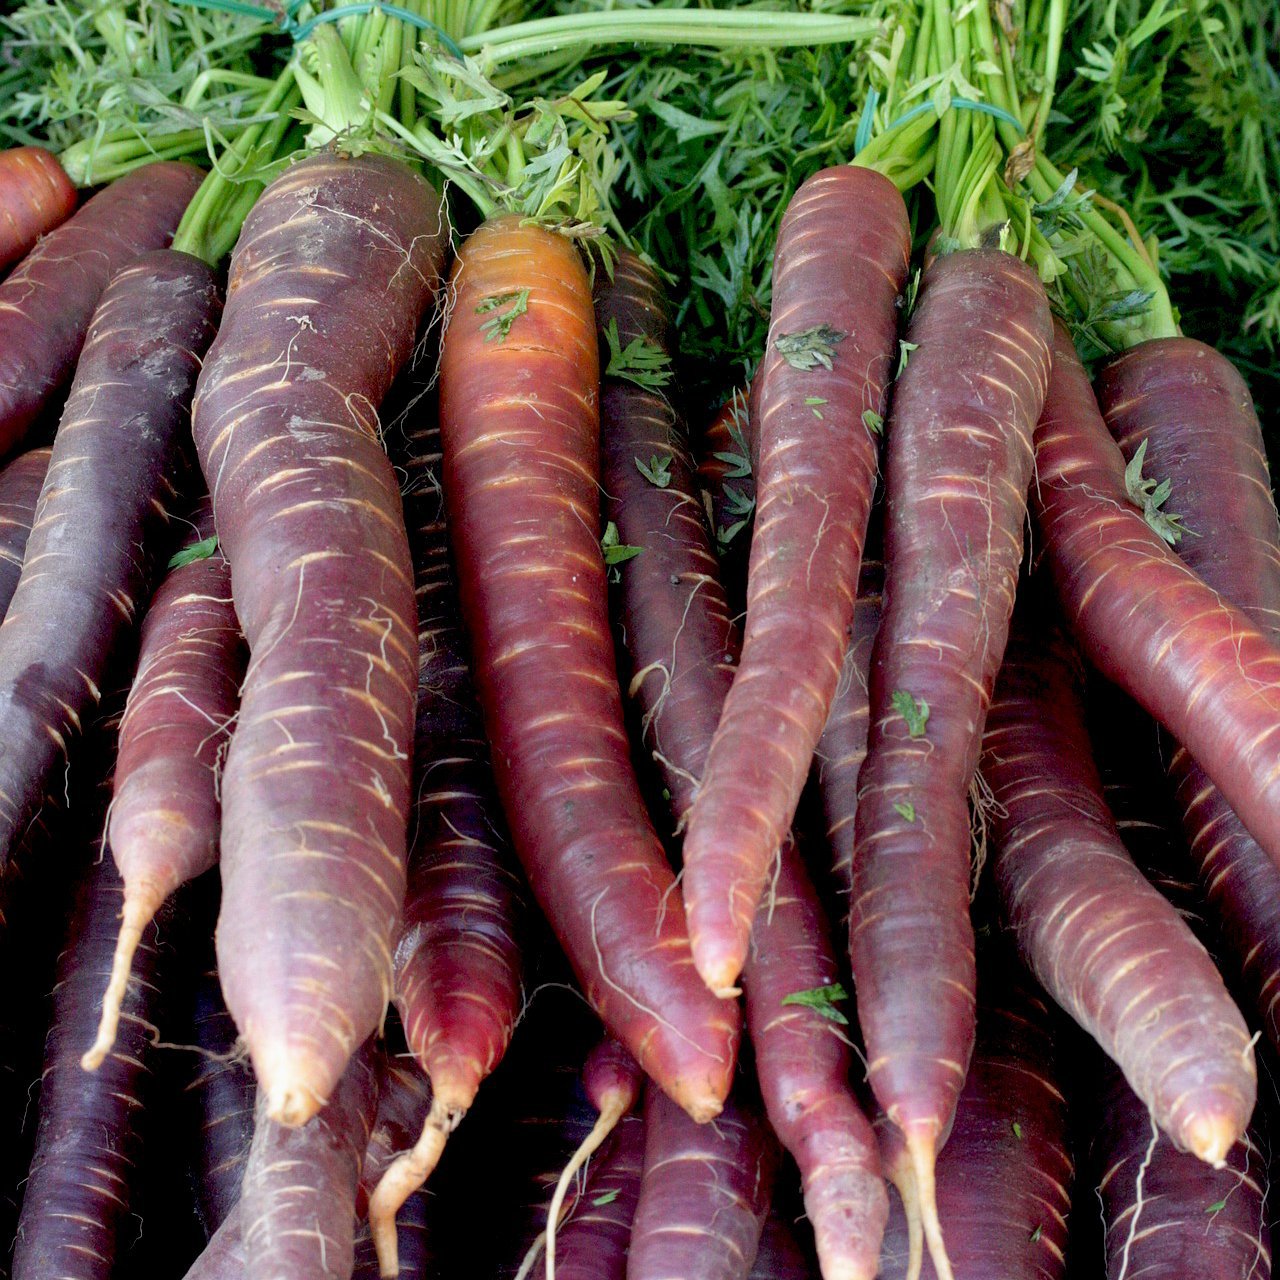 Carrot Seeds - Cosmic Purple - Sow True Seed